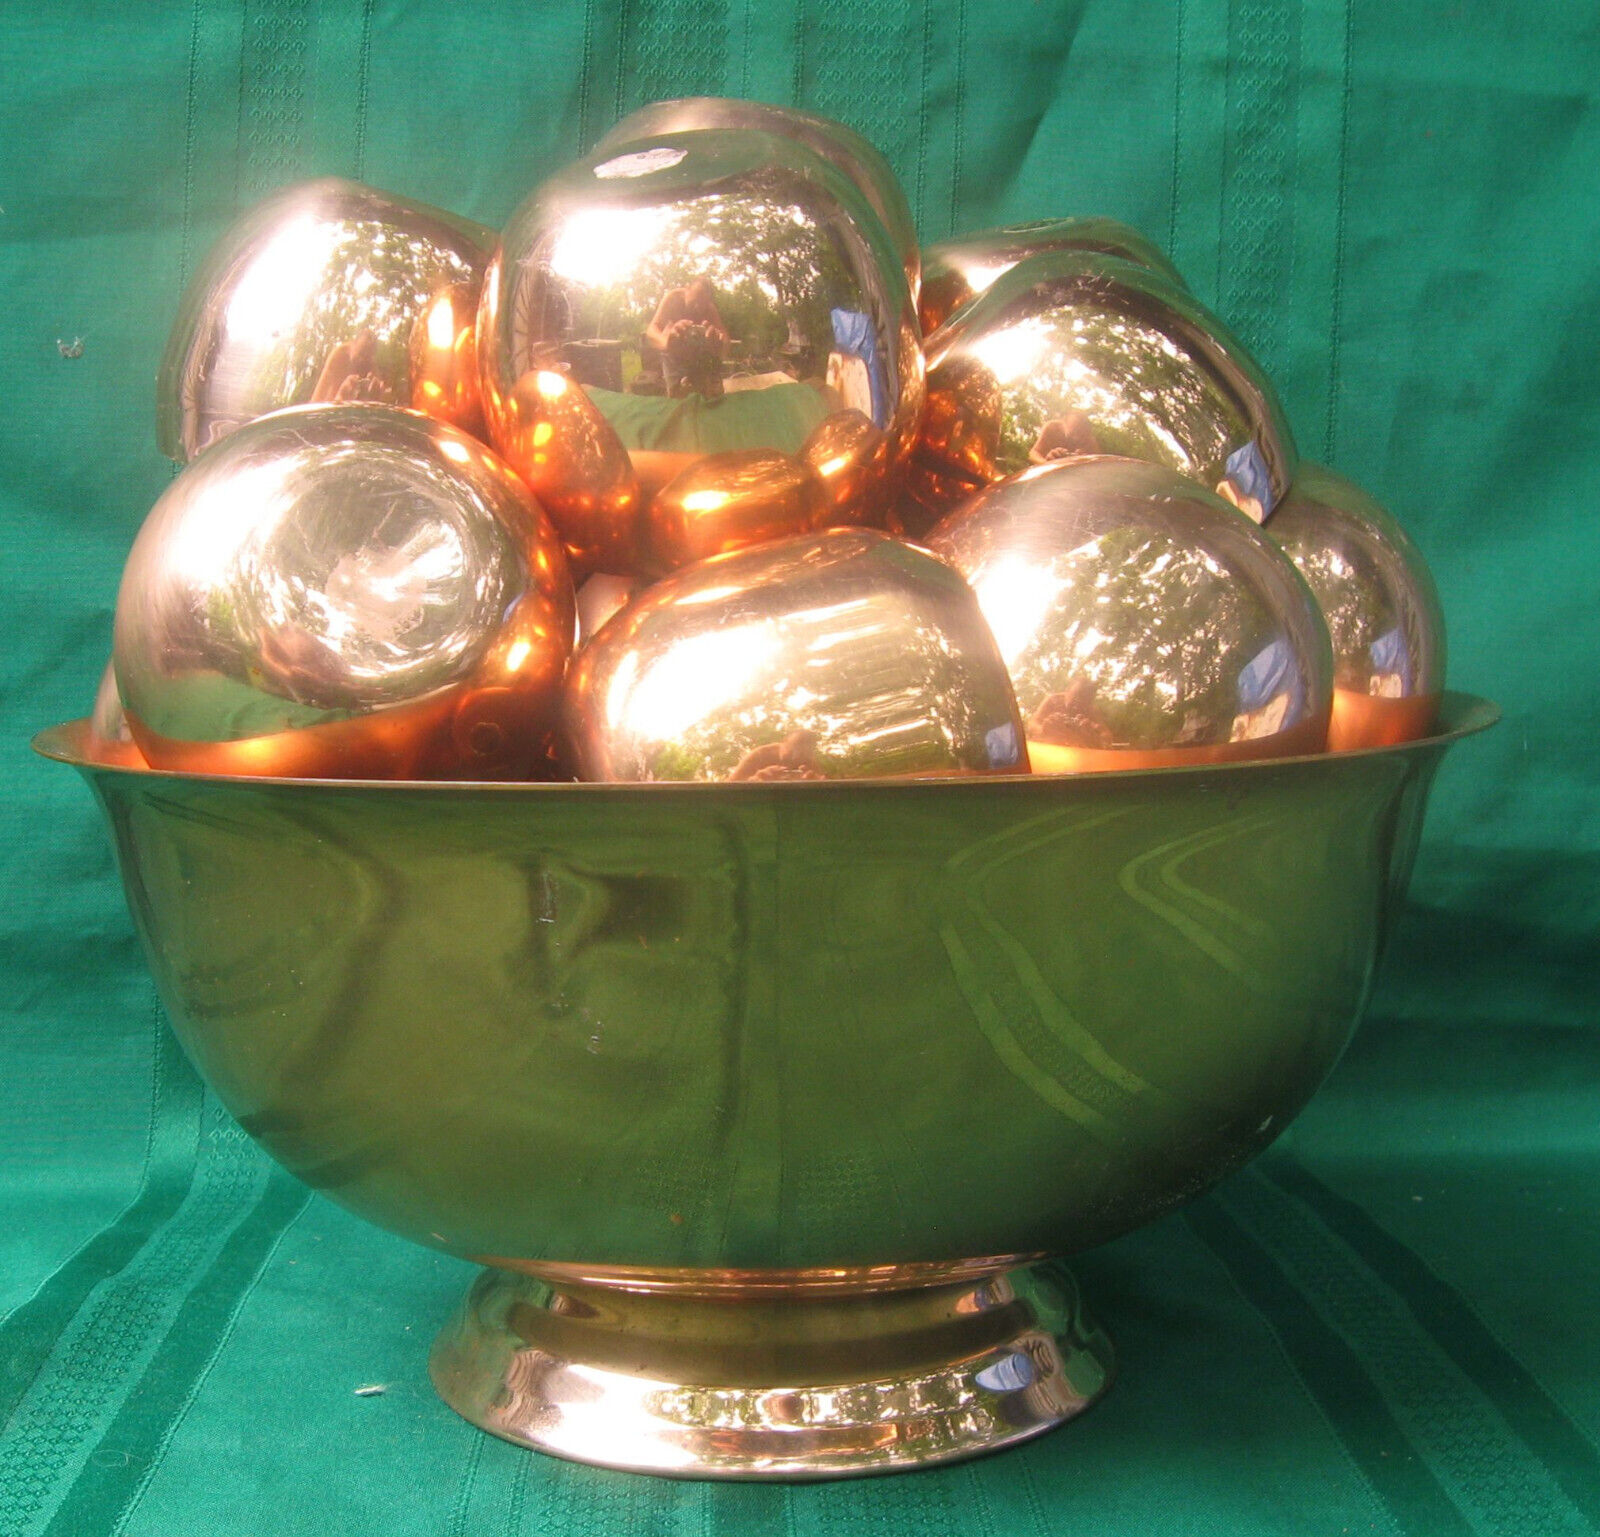 22 Pc Coppercraft Guild Punchbowl Set - 21 Copper Cups